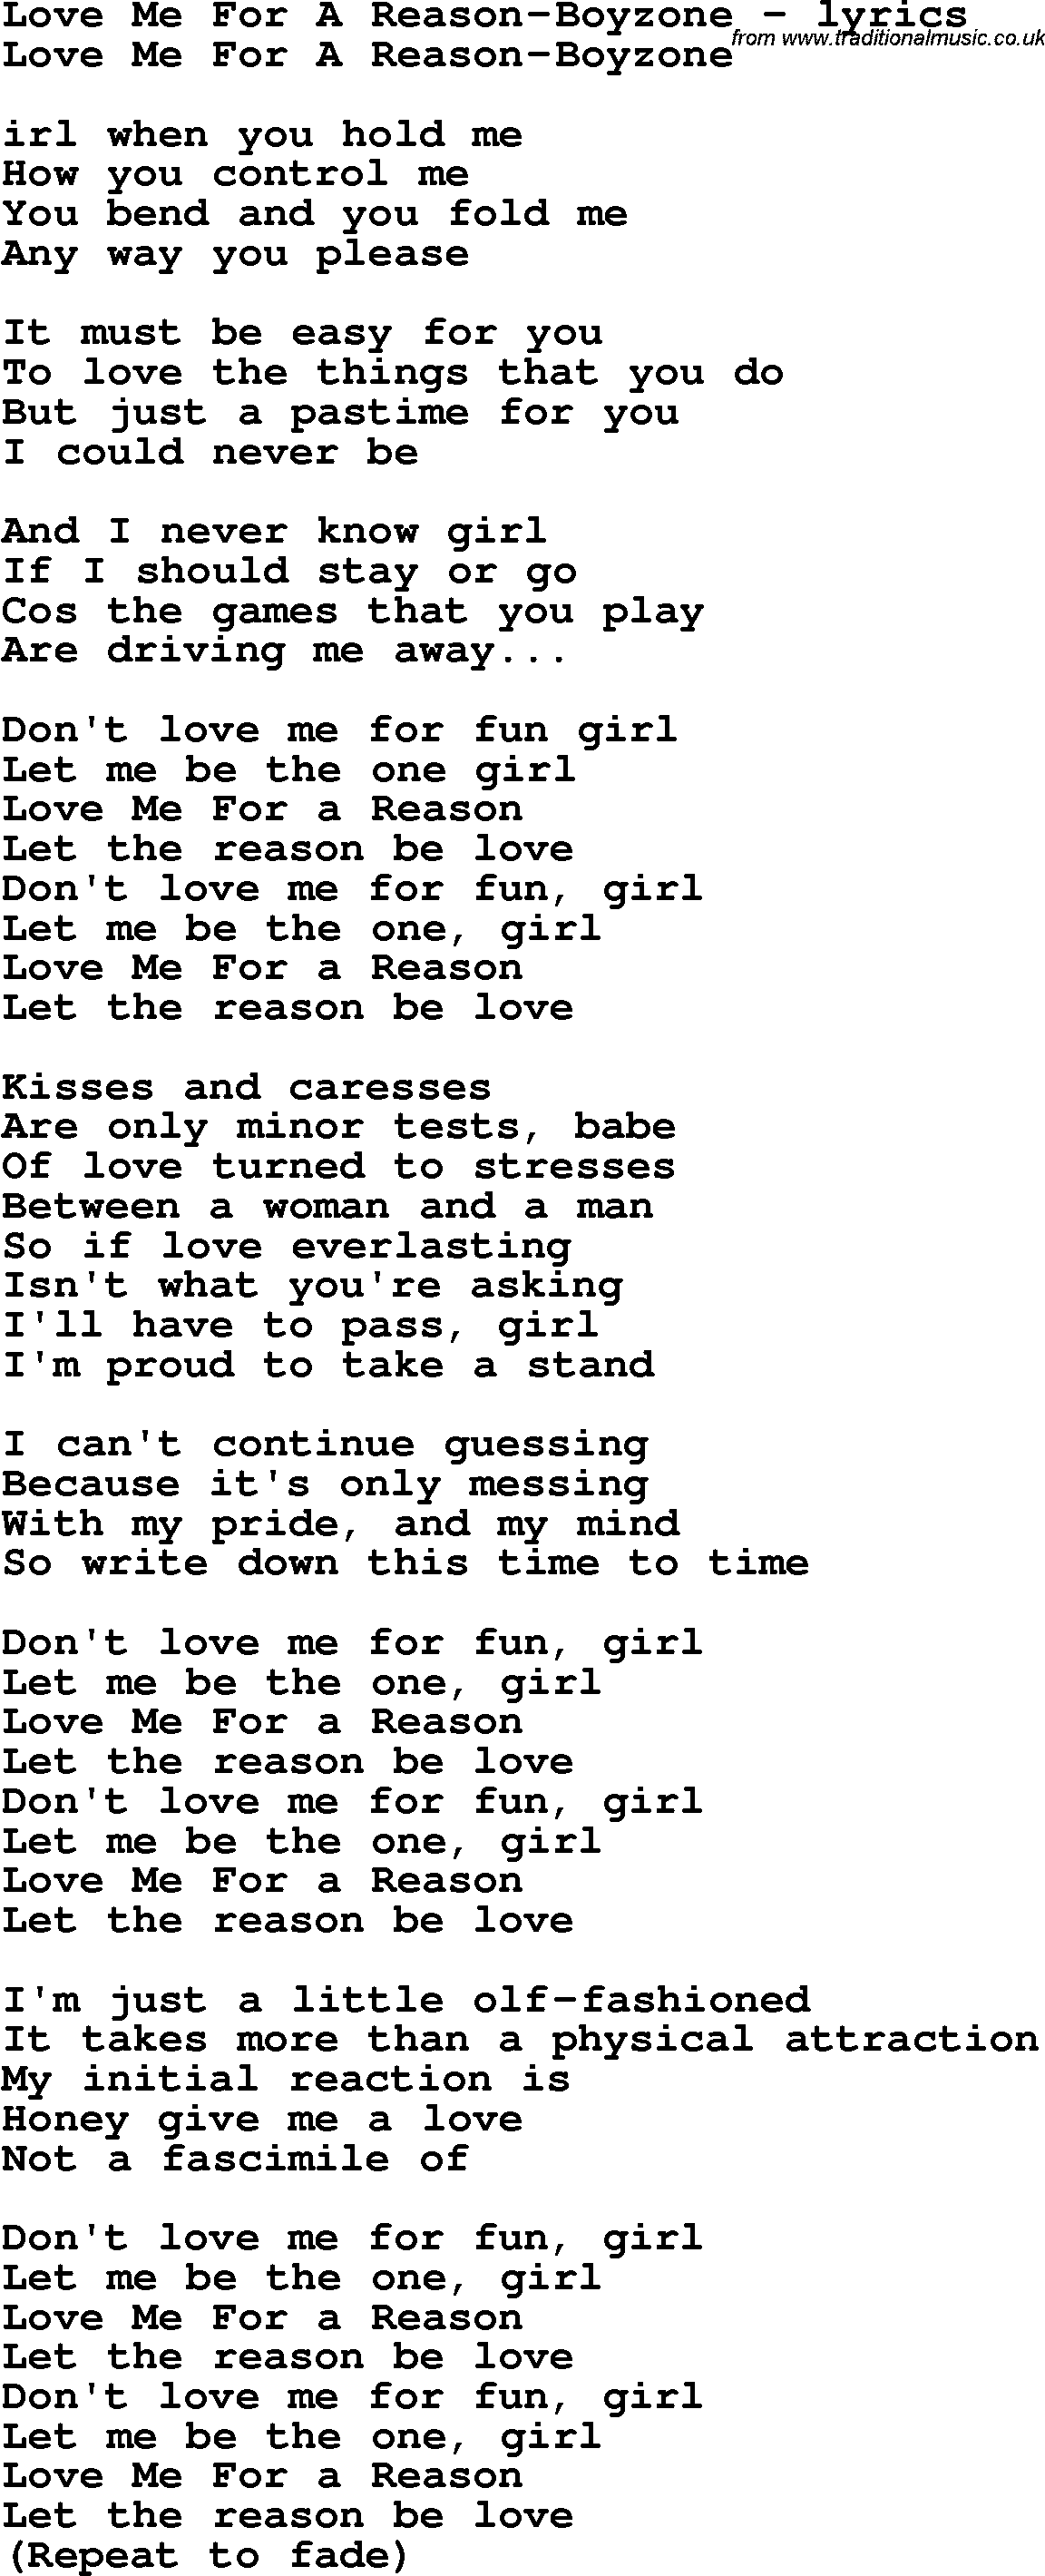 Love Song Lyrics for: Love Me For A Reason-Boyzone